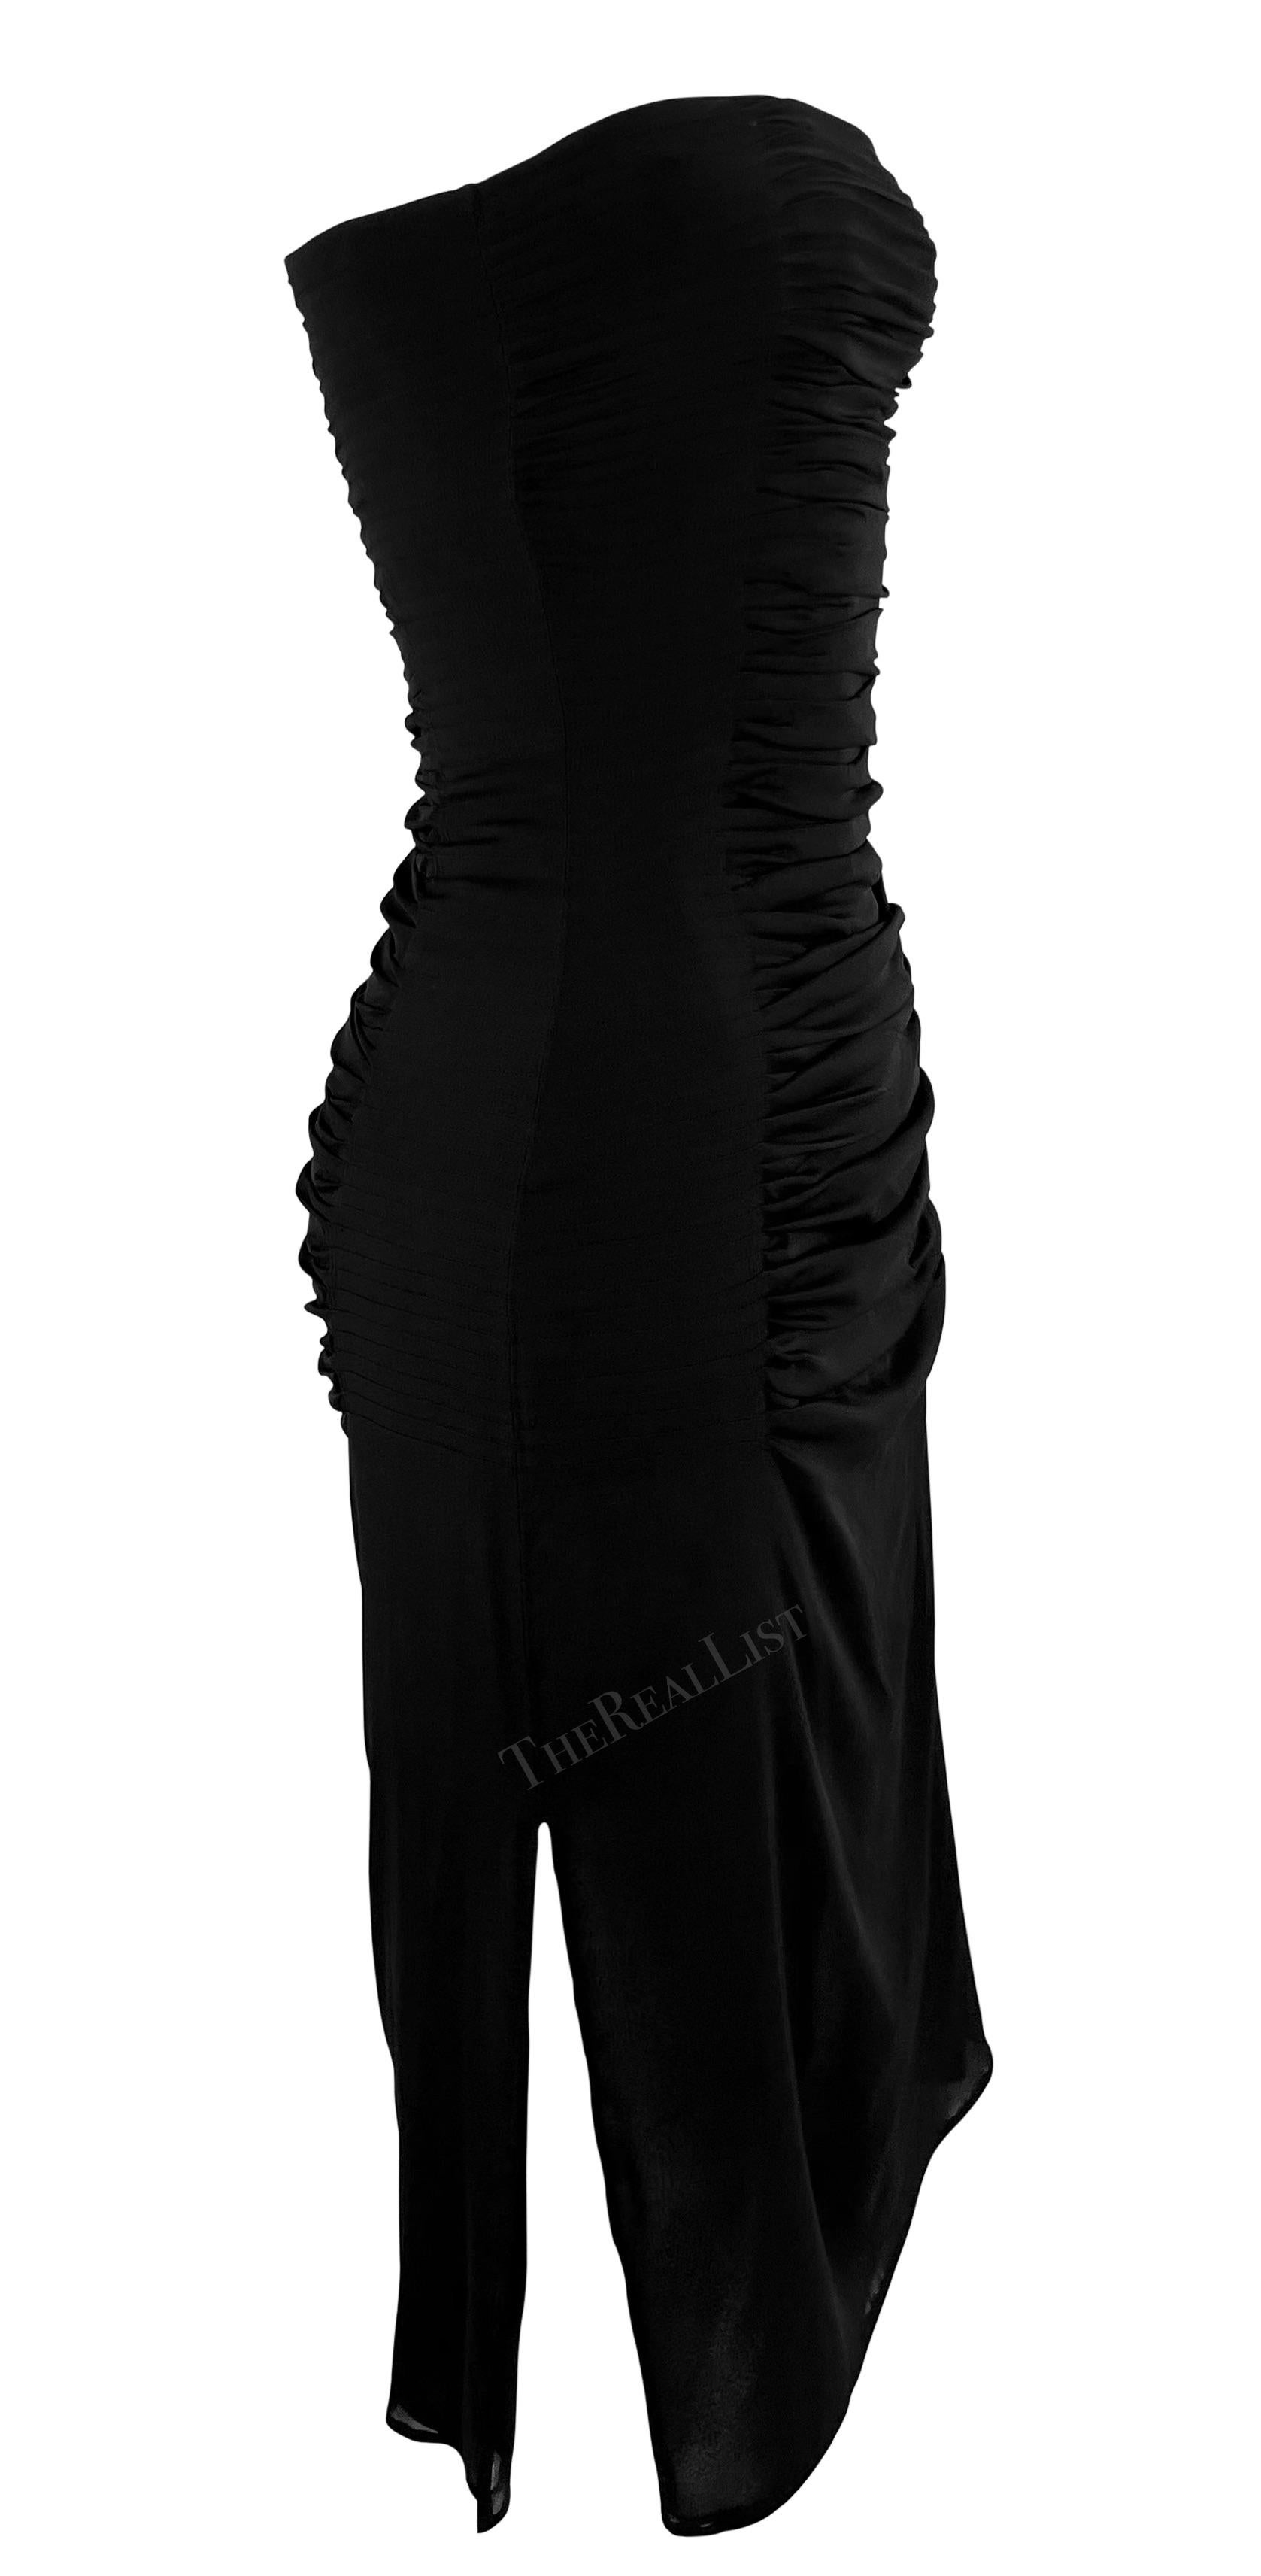 S/S 2001 Yves Saint Laurent by Tom Ford Sheer Black Pleated Strapless Mini Dress For Sale 4